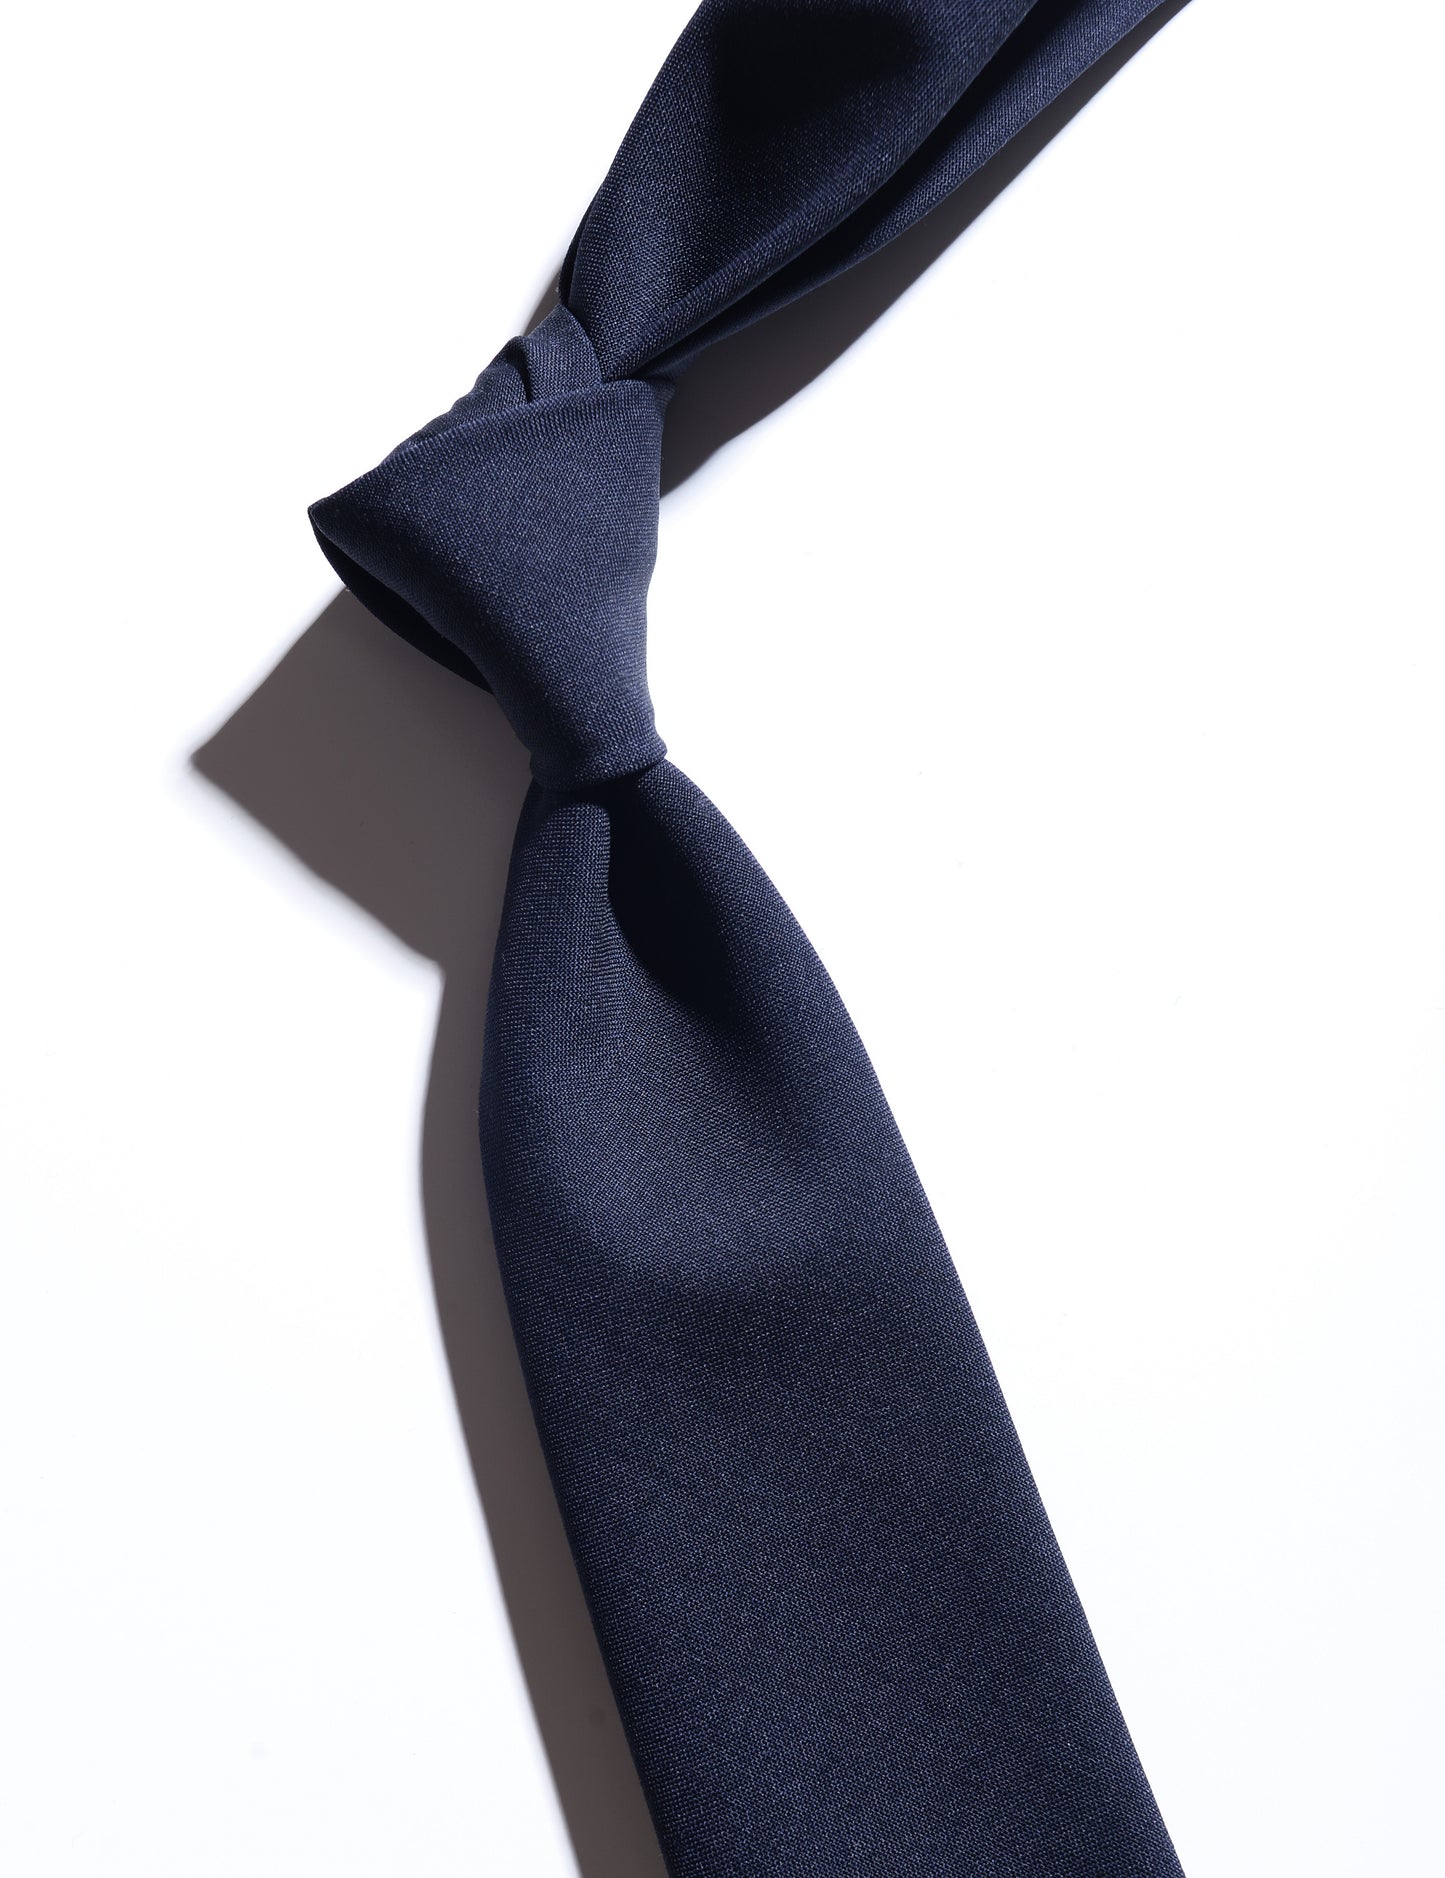 Detail of Super Fine Wool & Mohair Necktie - Midnight Blue showing fabric texture